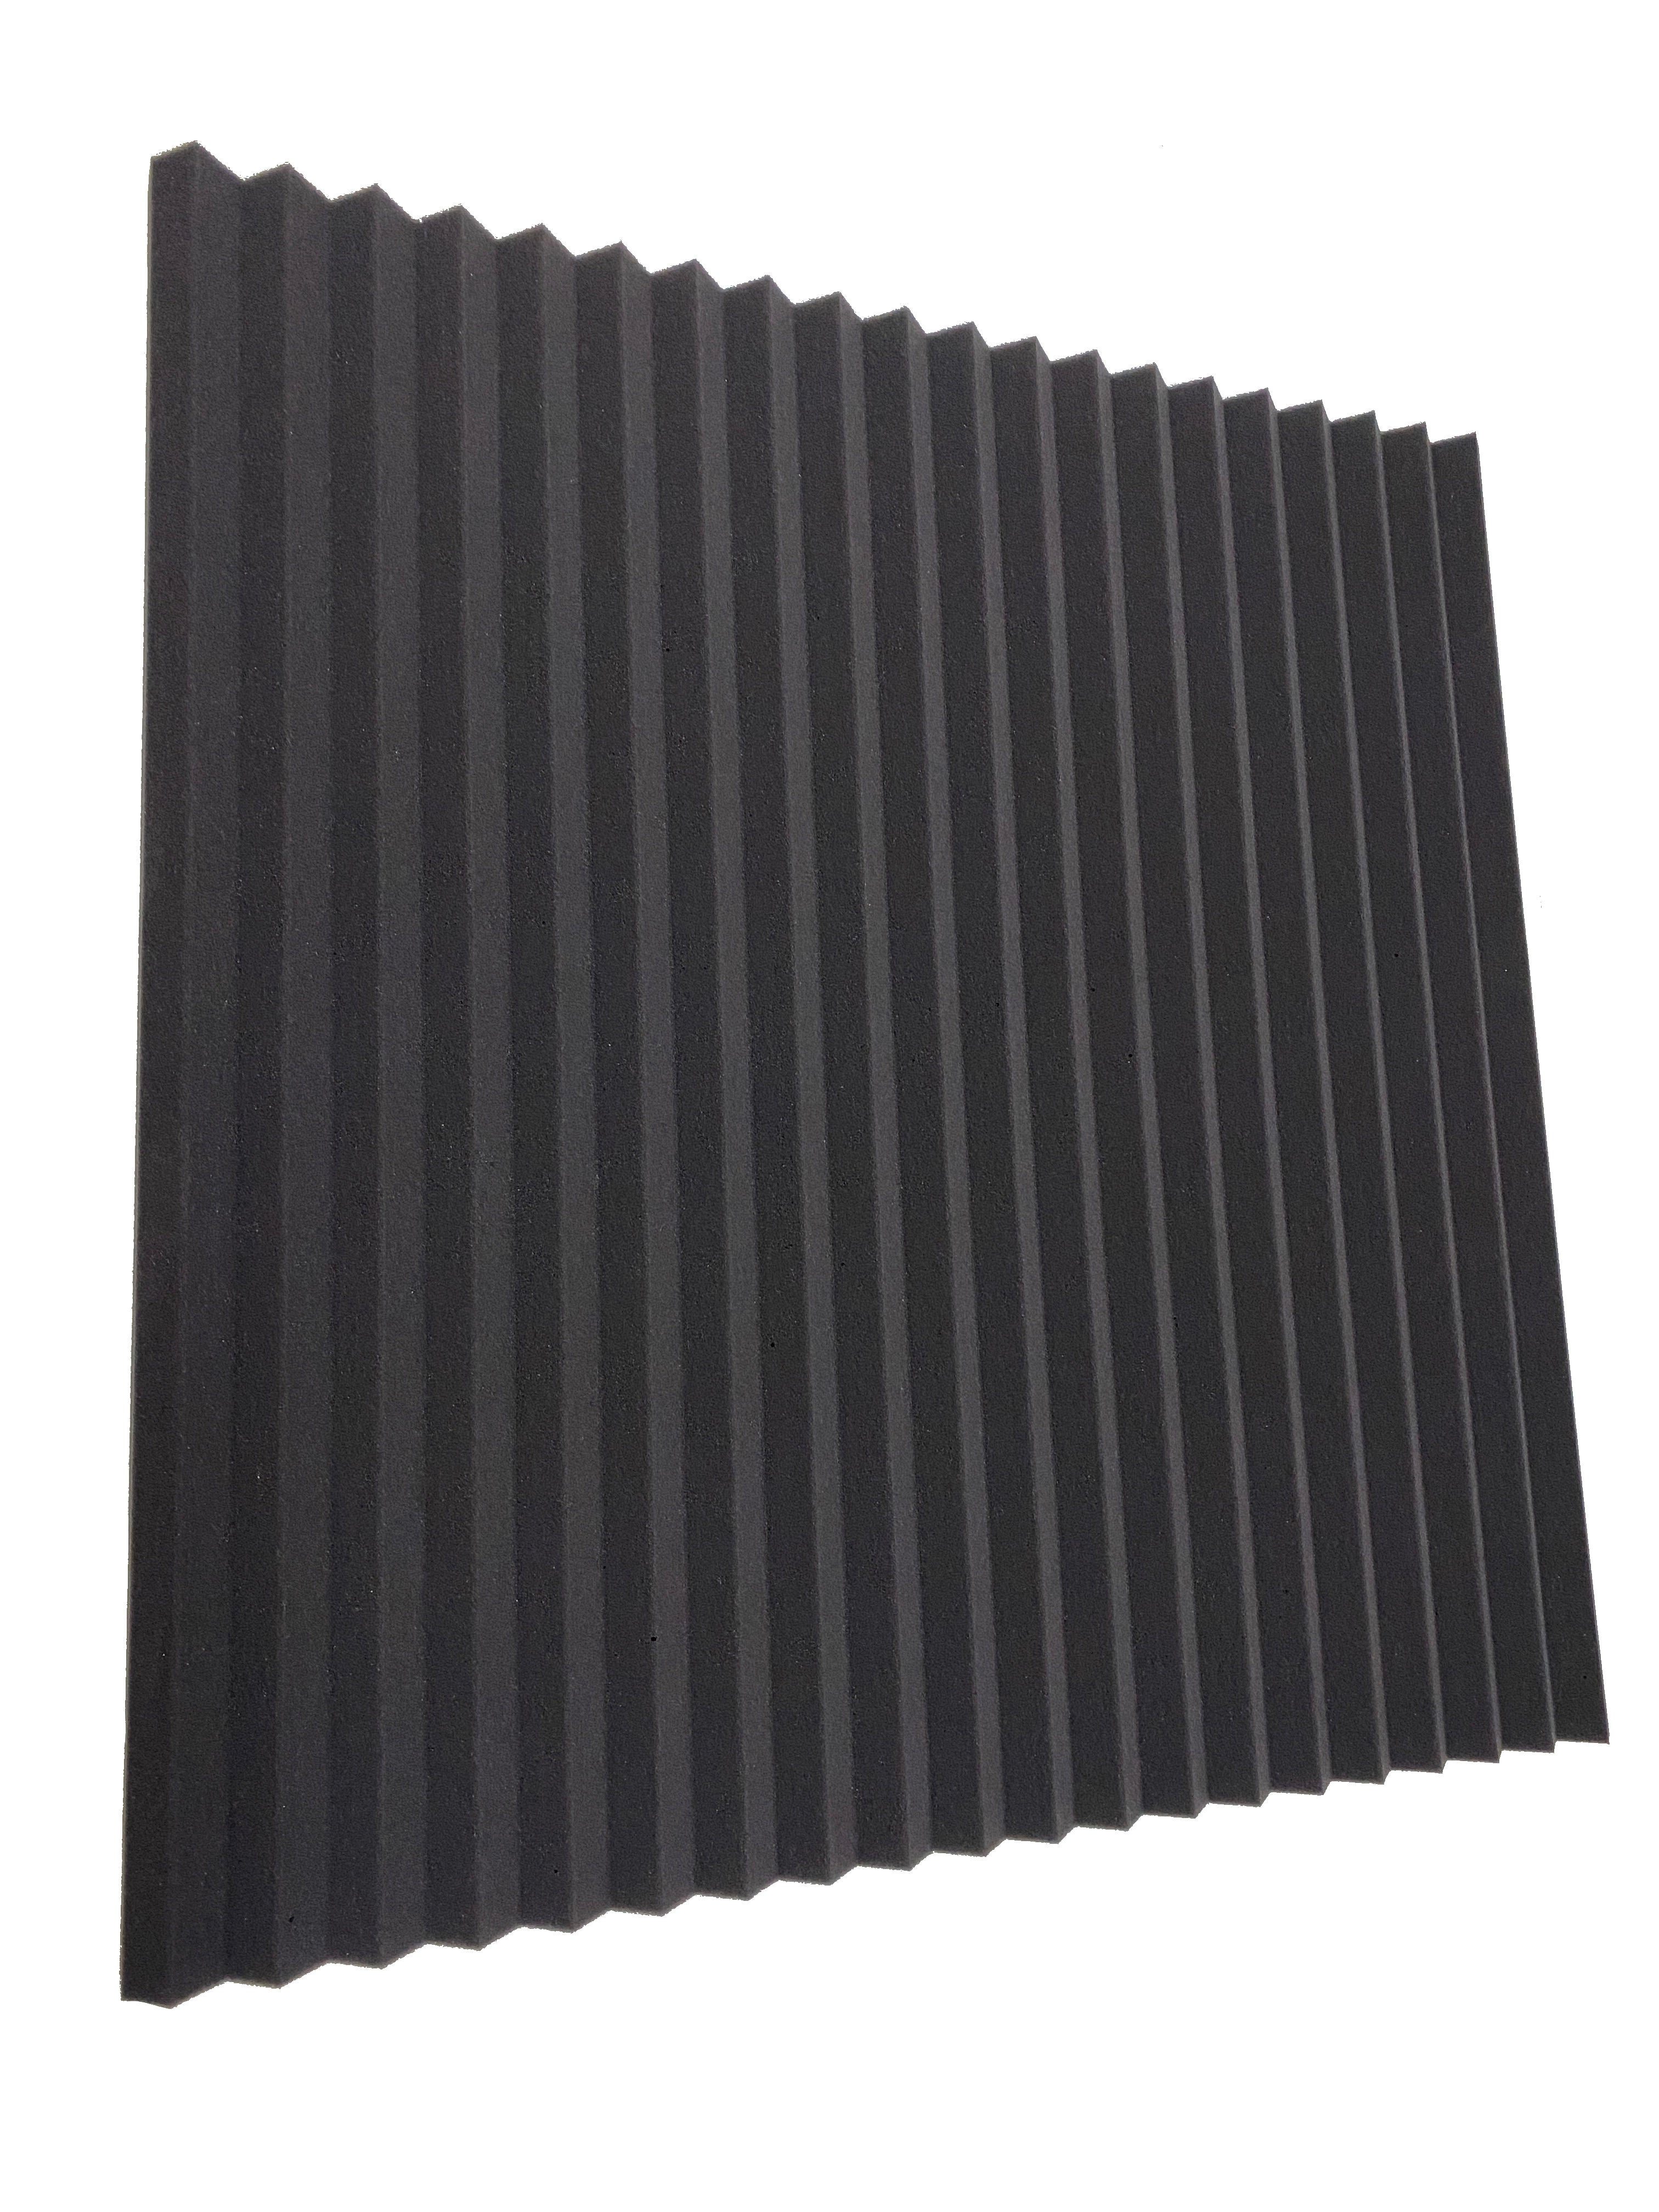 Buy dark-grey Wedge 30&quot; Acoustic Studio Foam Tile Kit